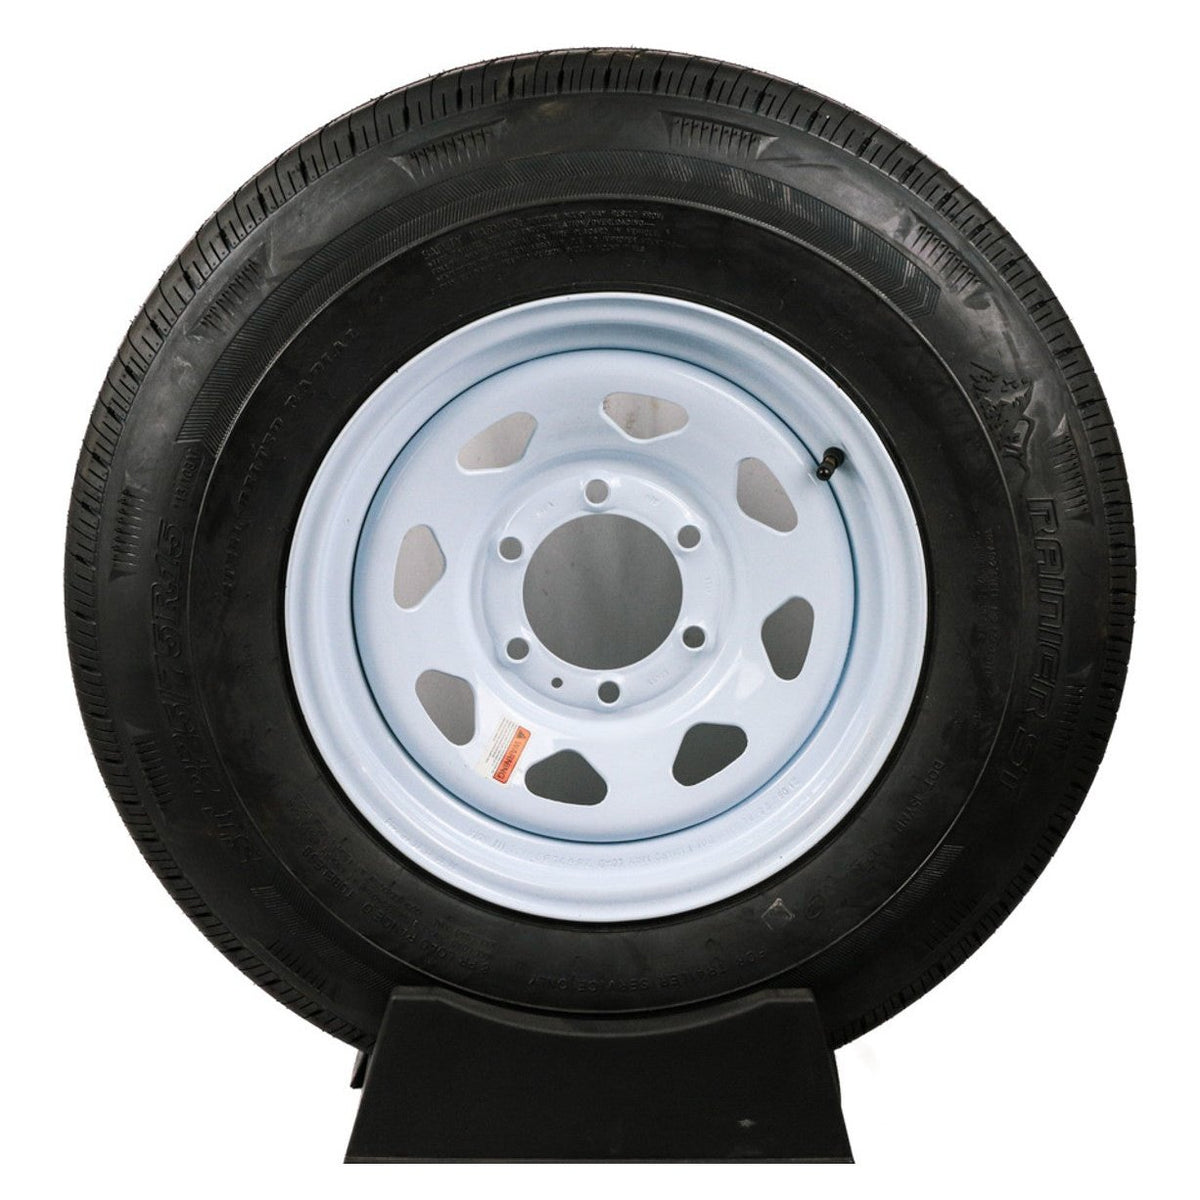 WESTLAKE ST100 ST225/75R15 117/112M E Trailer Tire on 6Lug White Spoke Wheel